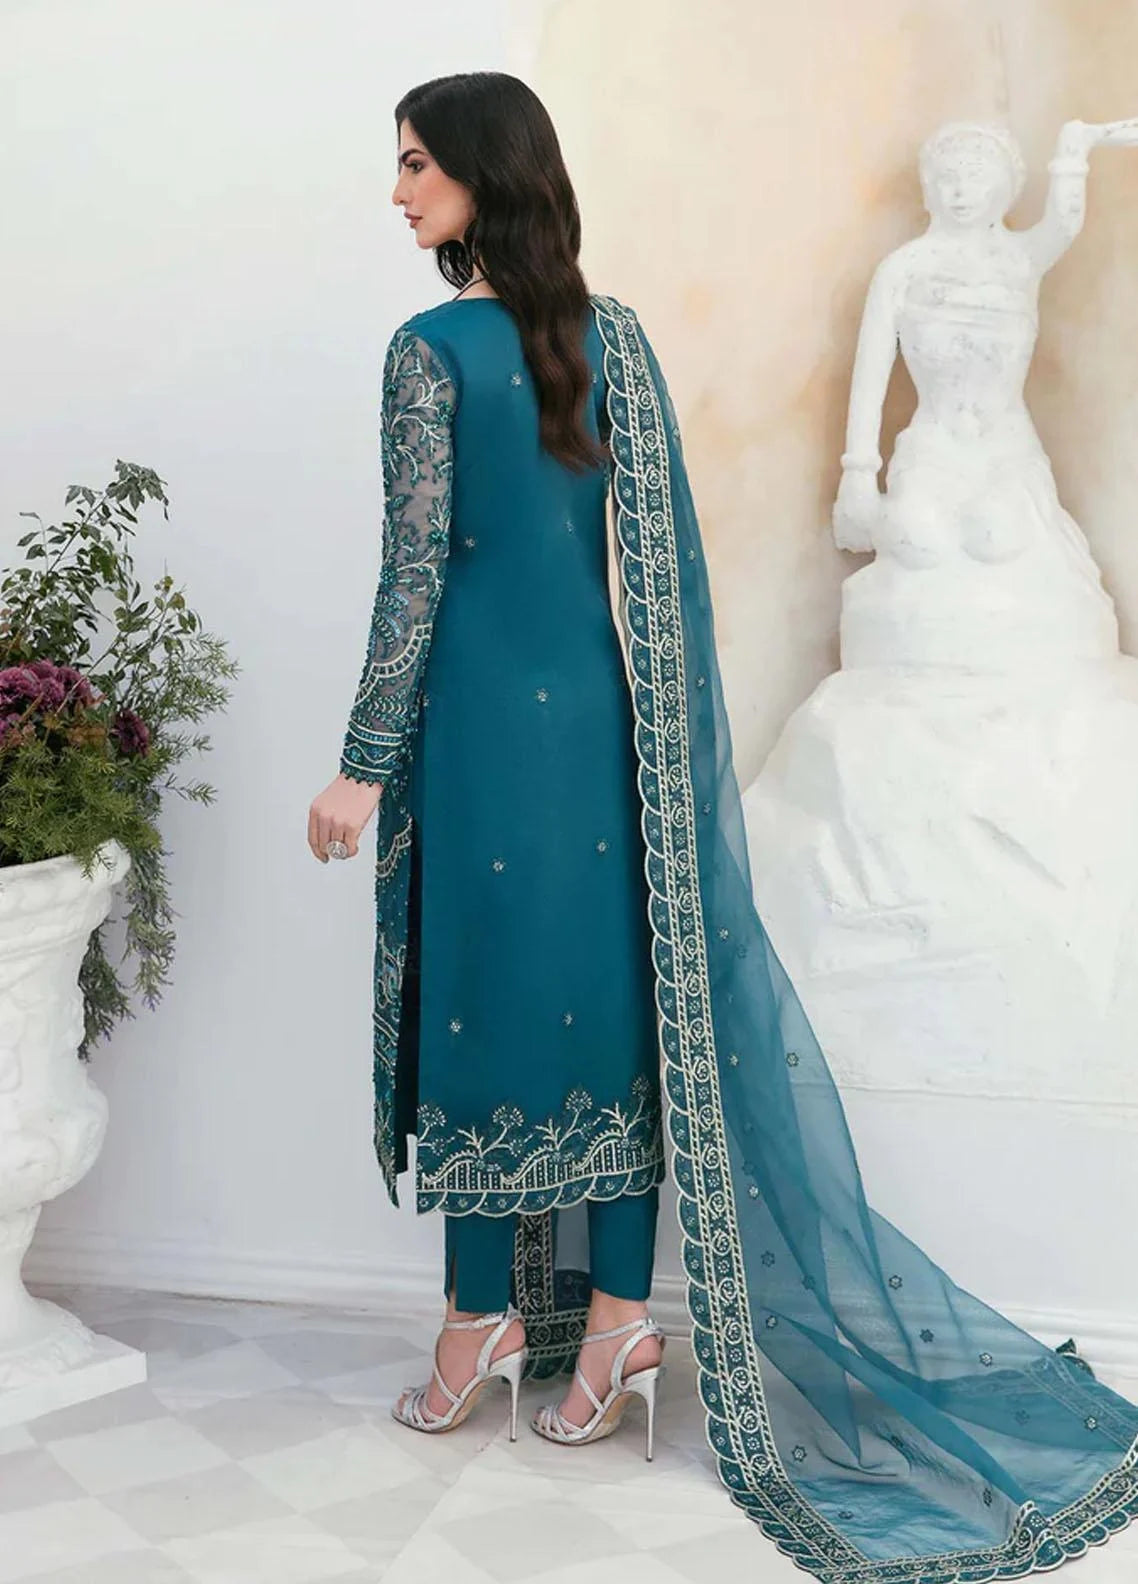 Akbar Aslam - Silvia Luxury Wedding Collection 2023 - Nurre